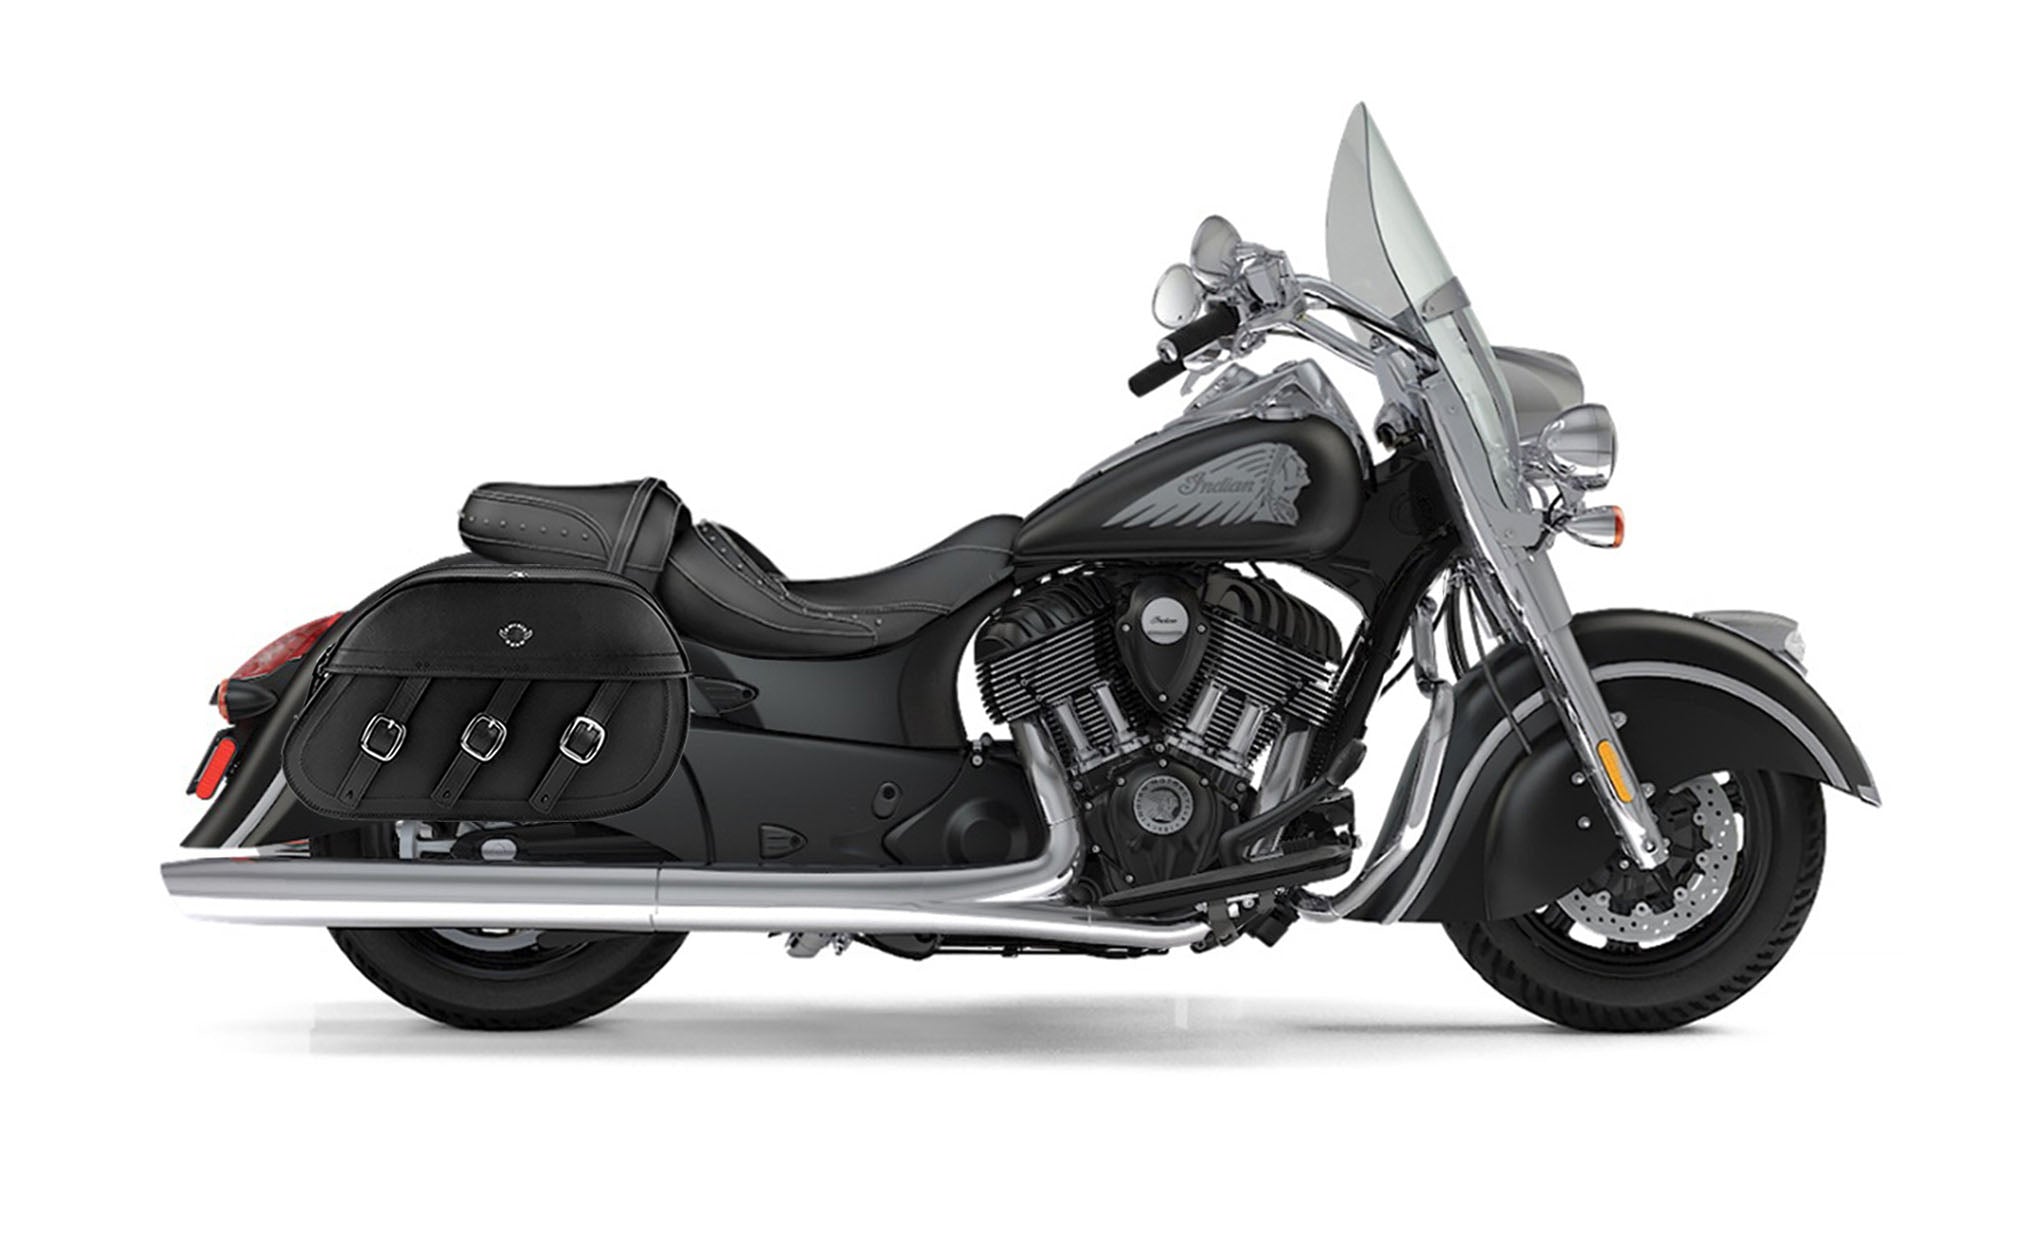 Viking Trianon Extra Large Indian Springfield Leather Motorcycle Saddlebags on Bike Photo @expand